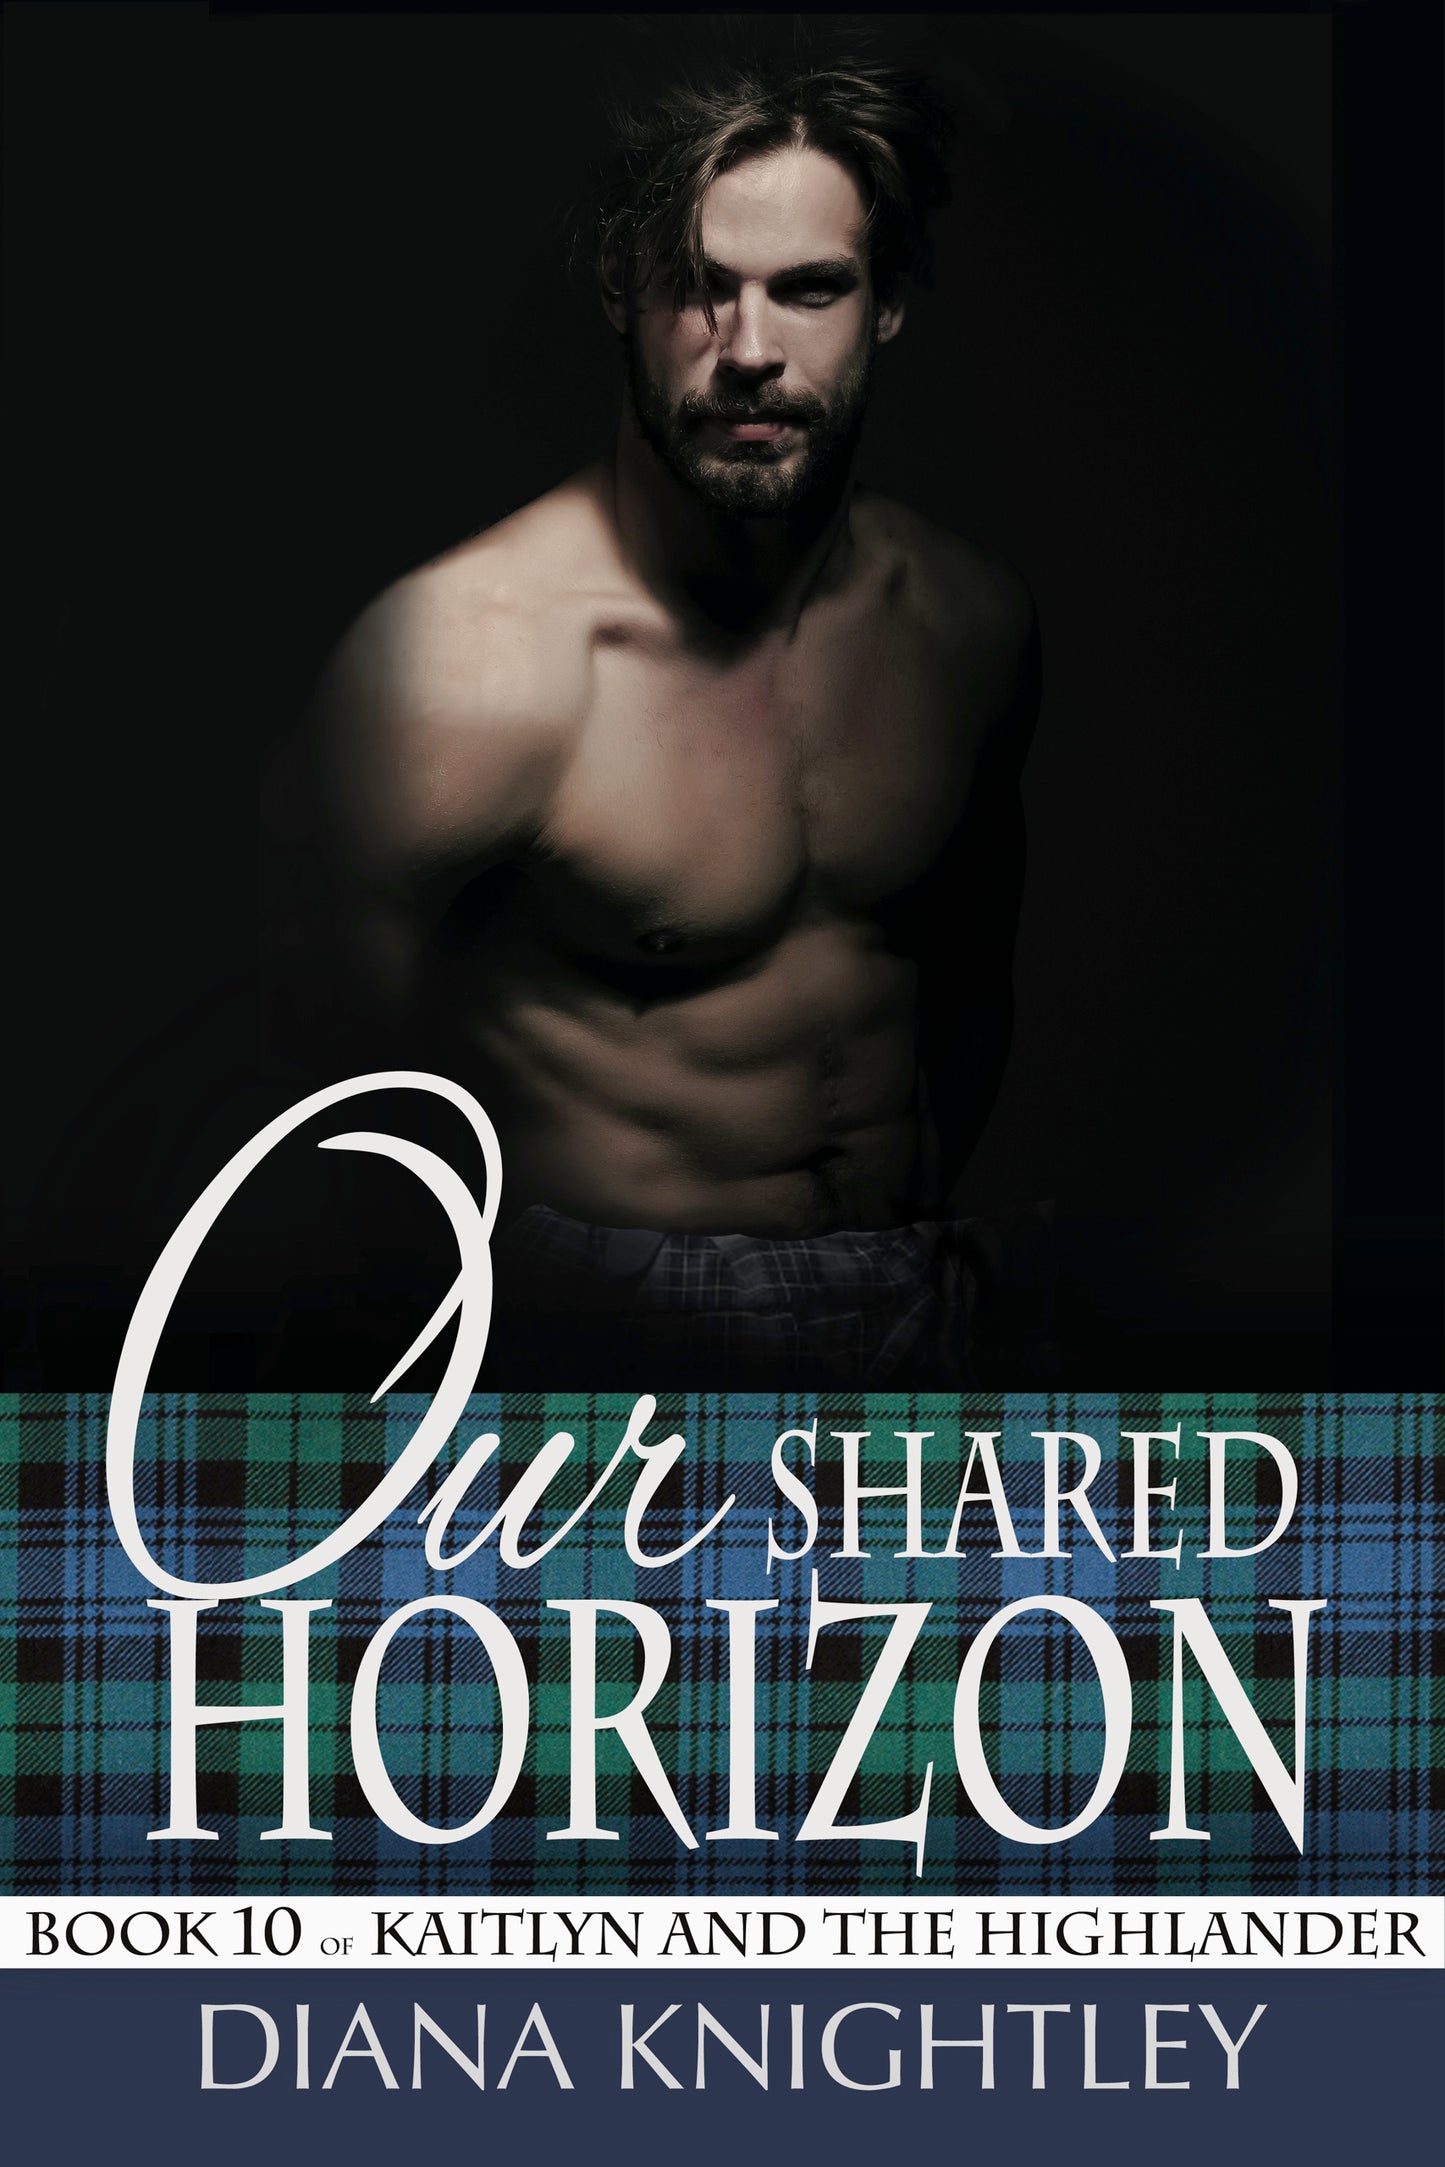 Book 10: Our Shared Horizon (KATH)